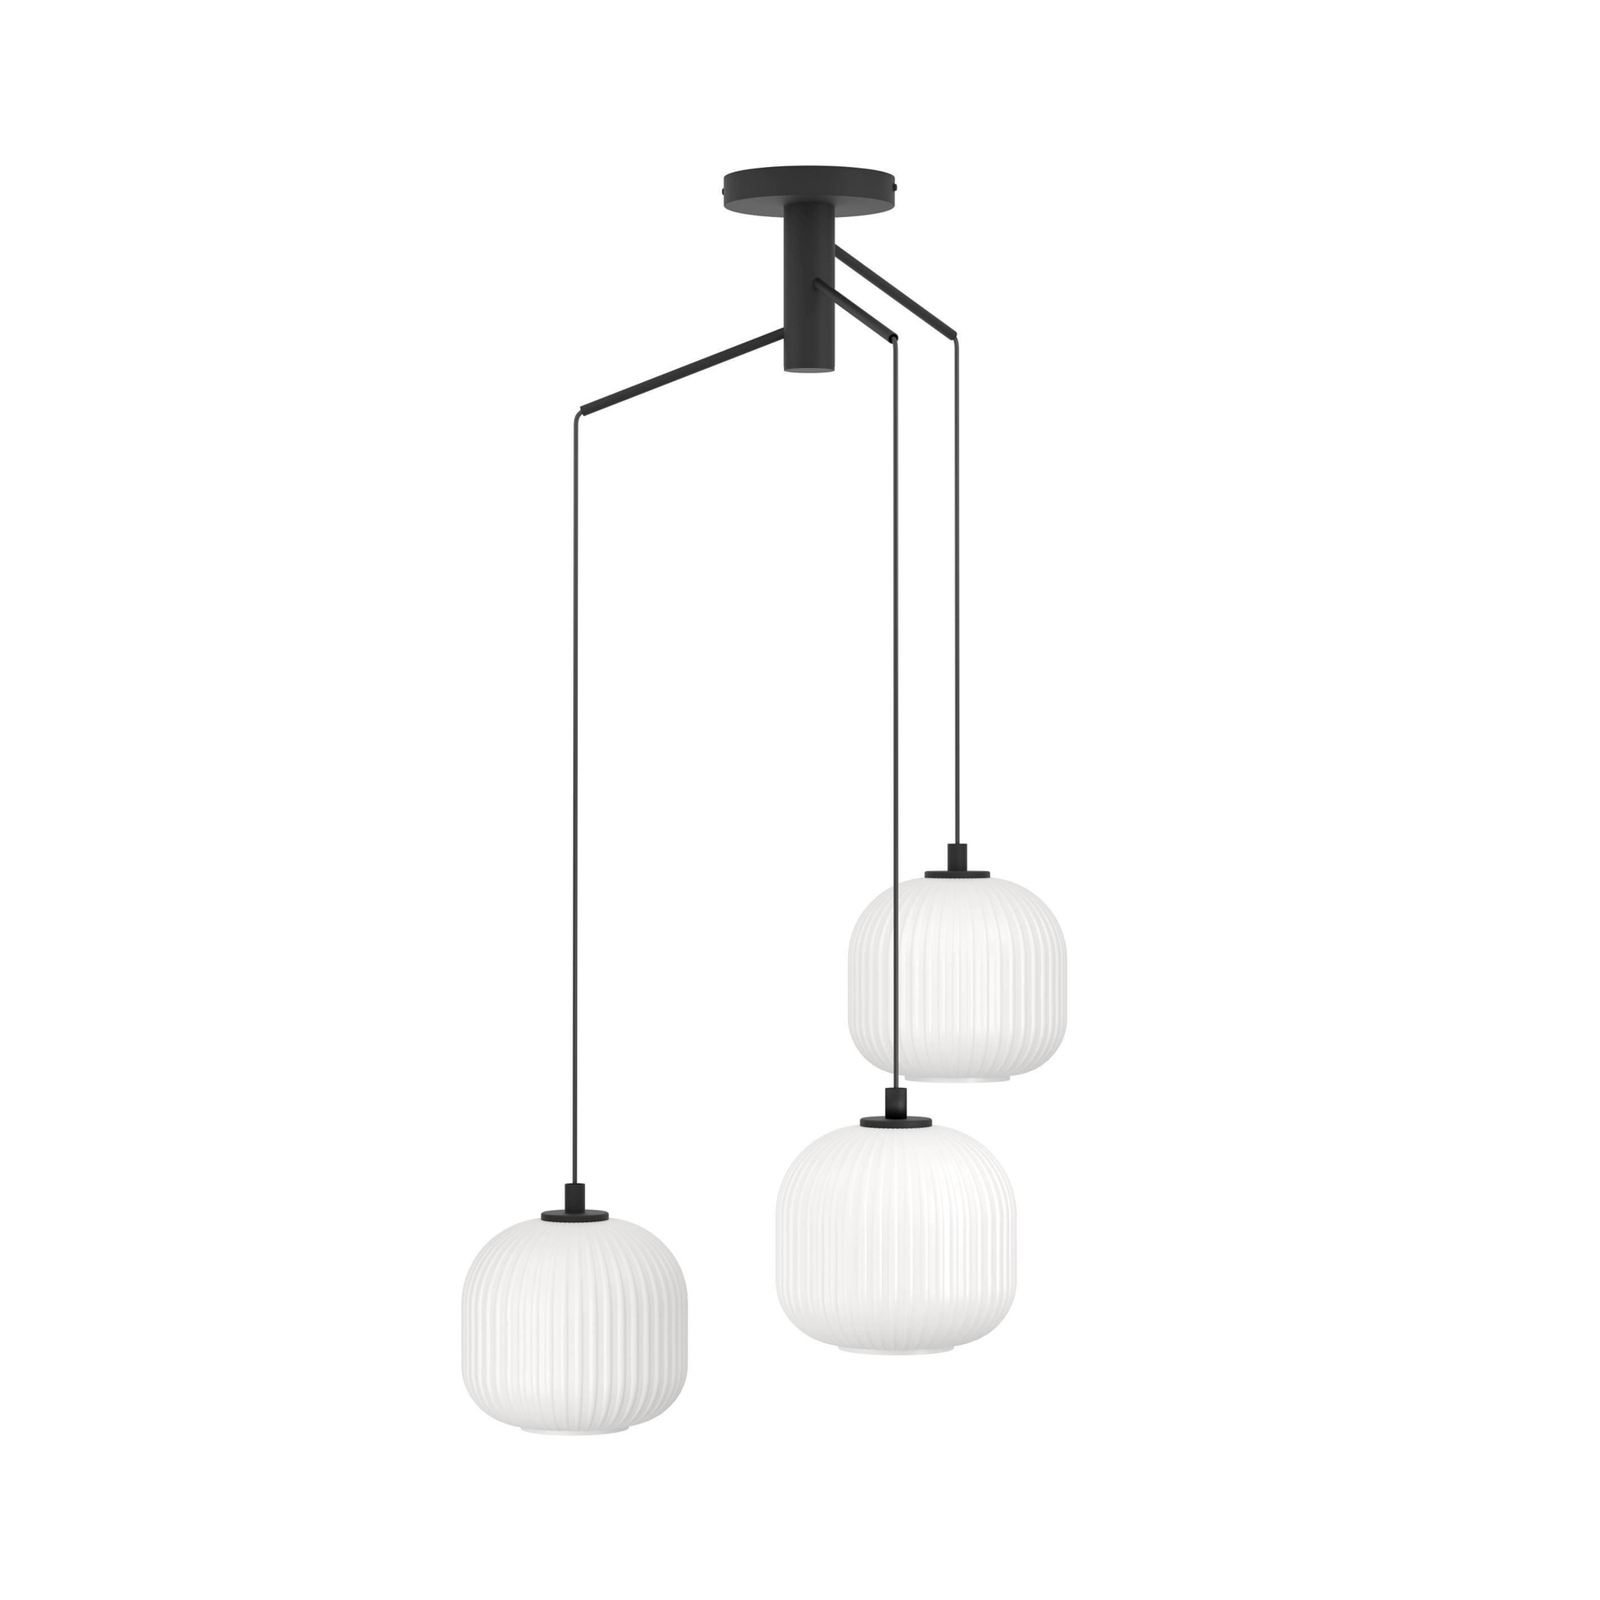 Mantunalle hanglamp, Ø 62 cm, zwart/wit, 3-lamps.